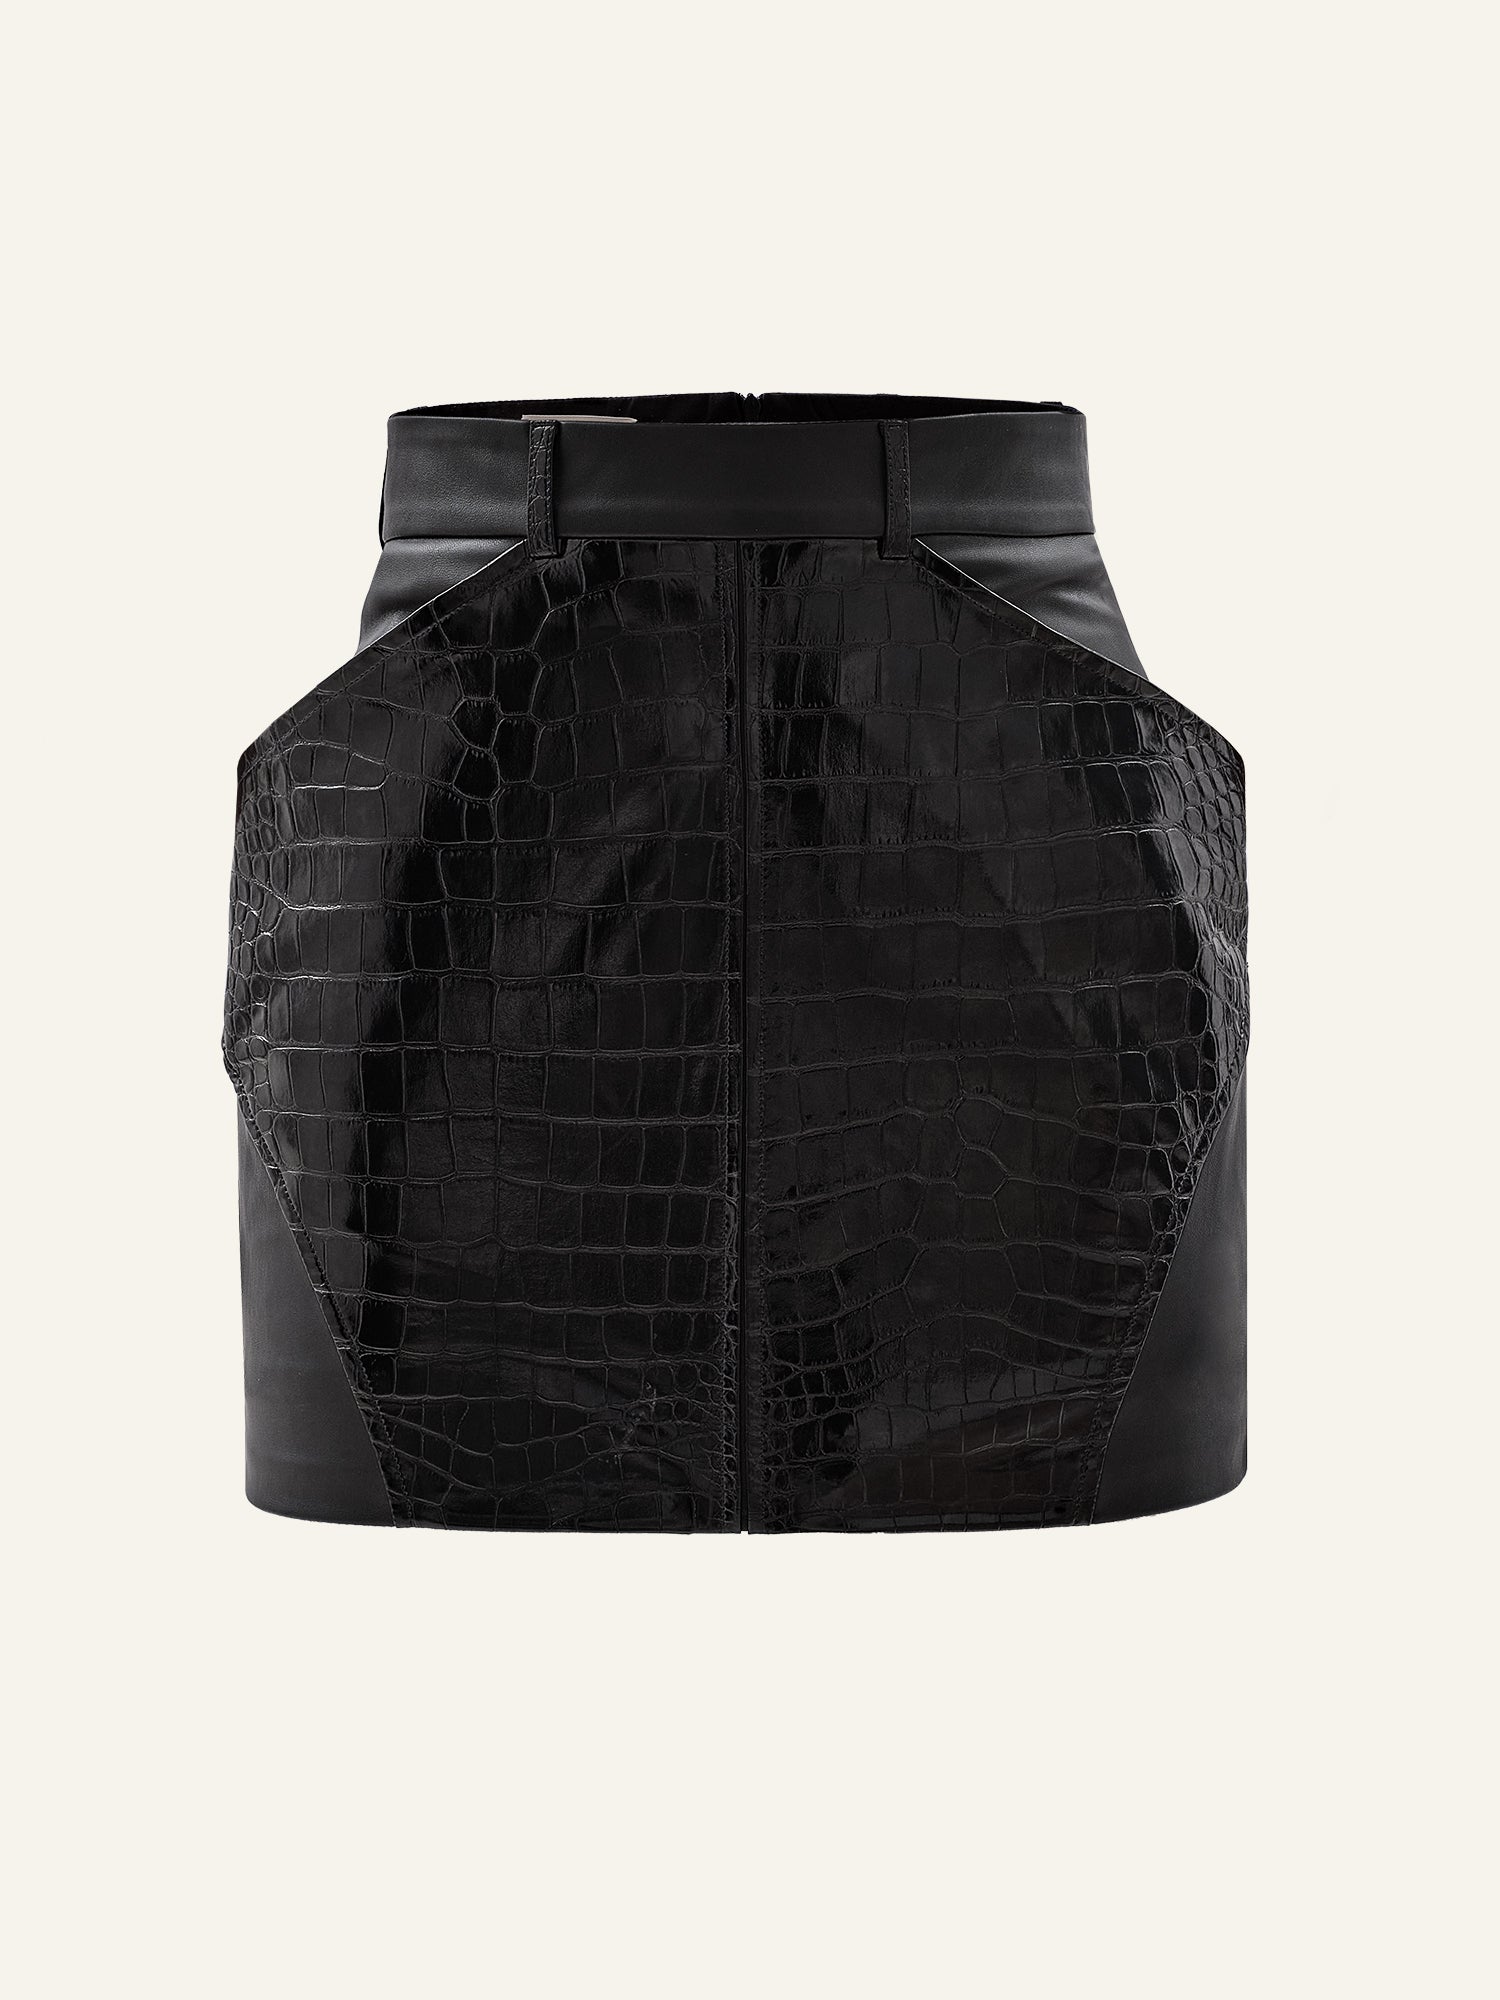 Product photo of a black vegan leather crocodile printed short skort